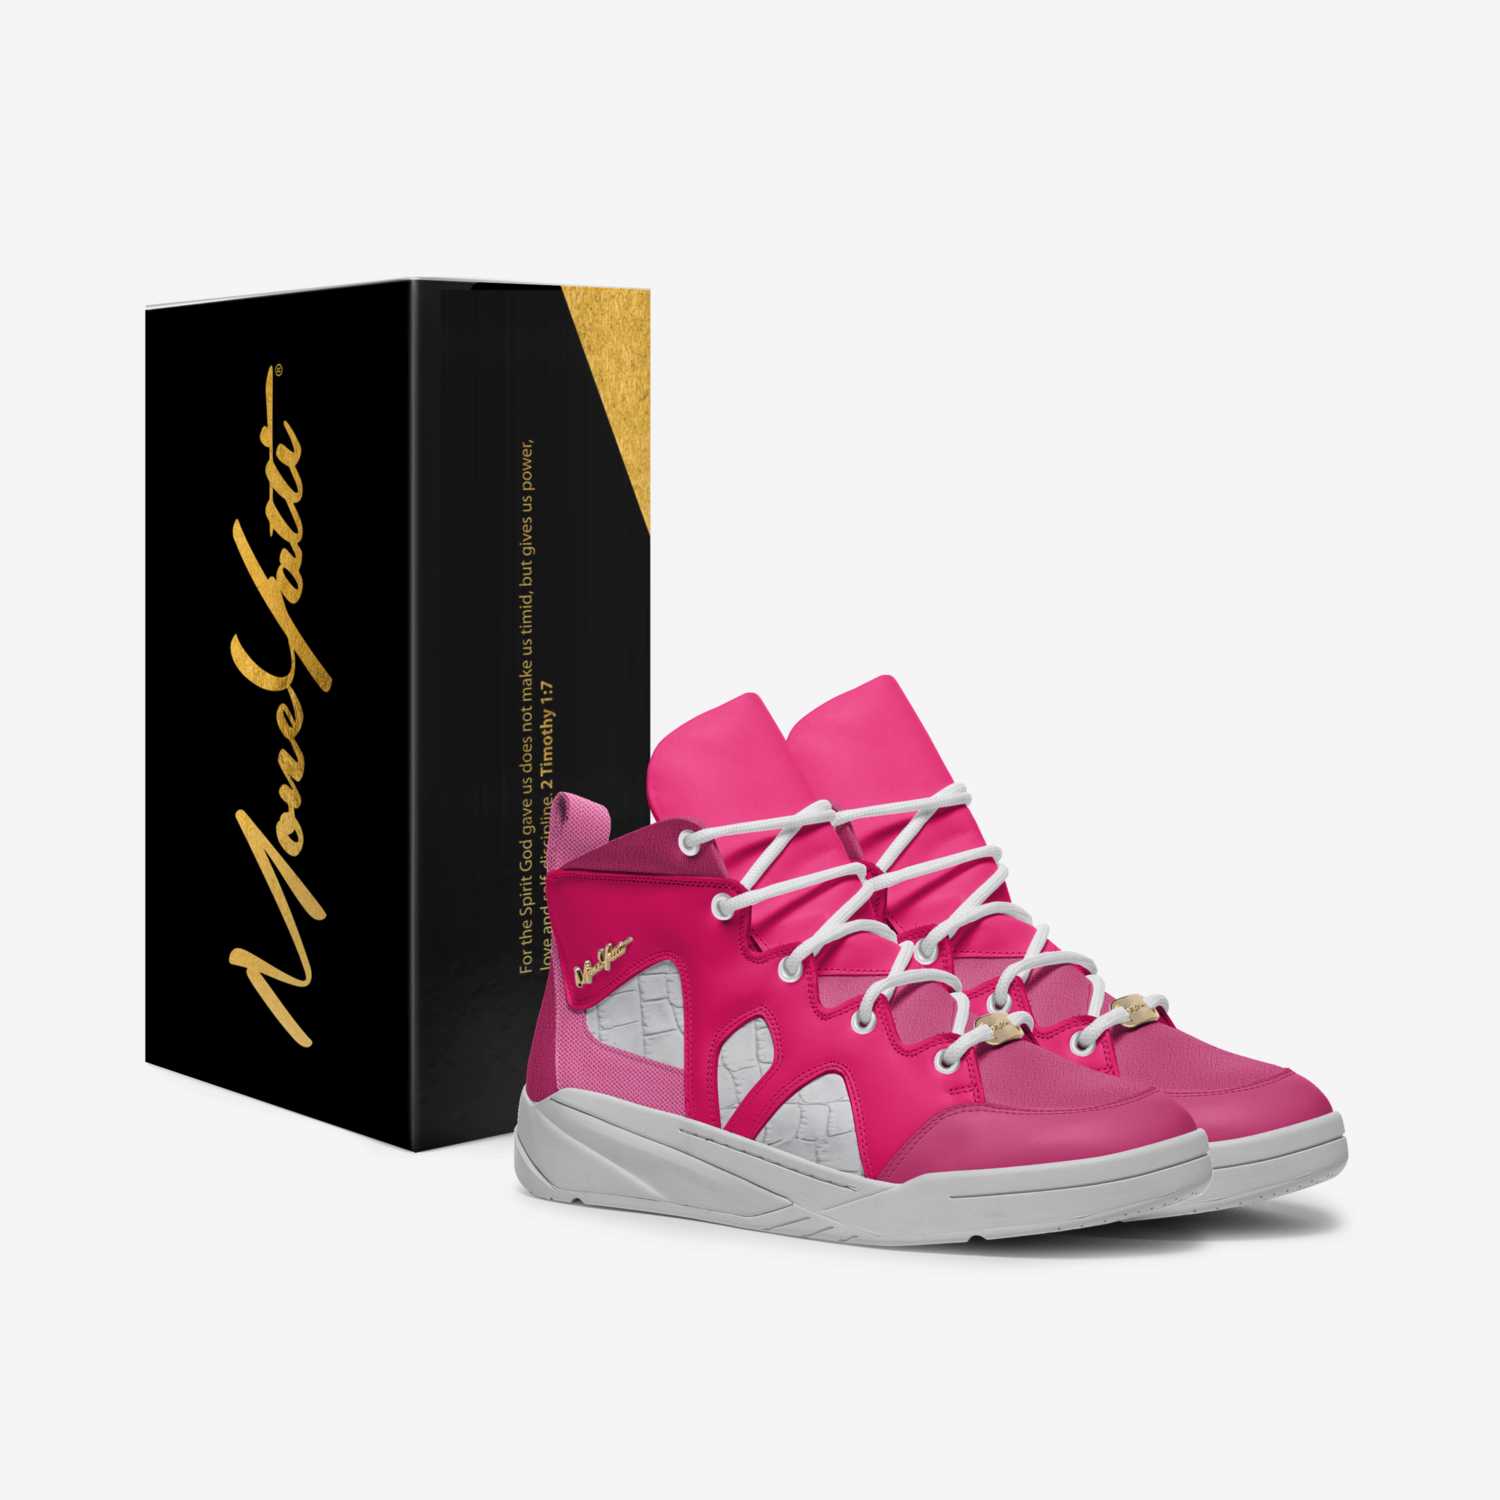 MONEYATTI TAKEOFF 008 custom made in Italy shoes by Moneyatti Brand | Box view